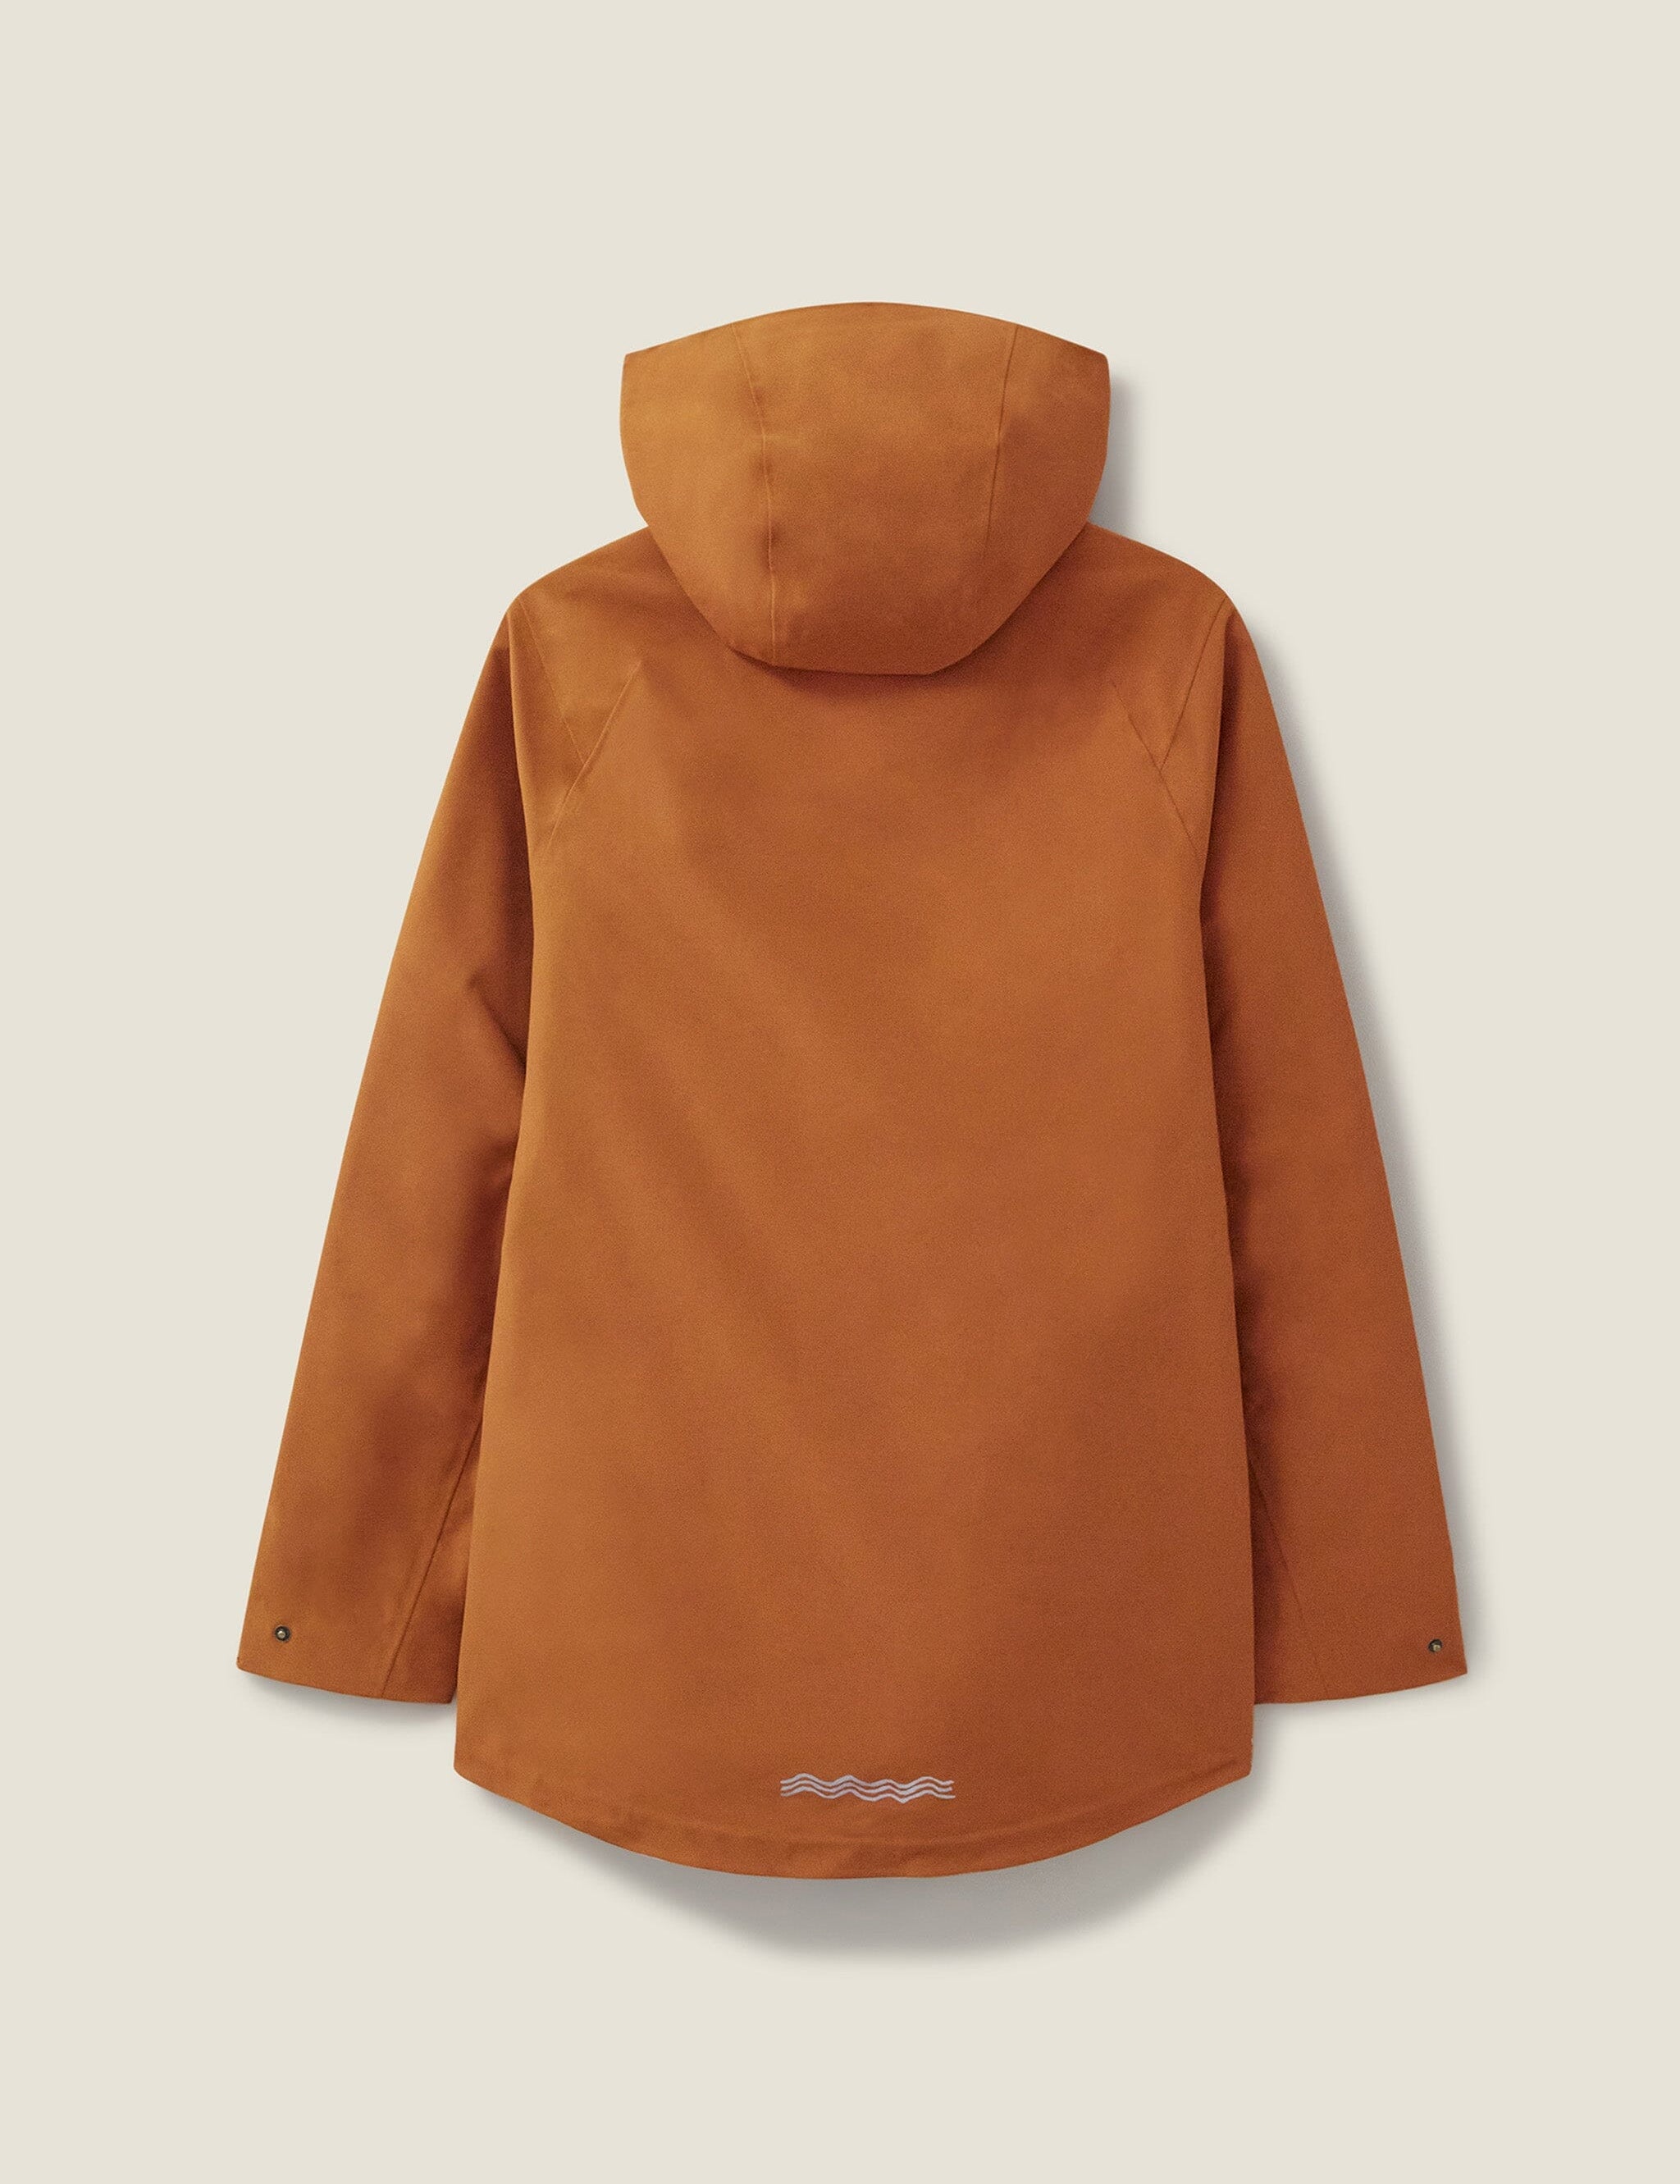 mens-burnt-orange-bergen-waterproof-jacket-918589_6a018493-1d5b-4cfc-9dd3-28a173262af8.jpg